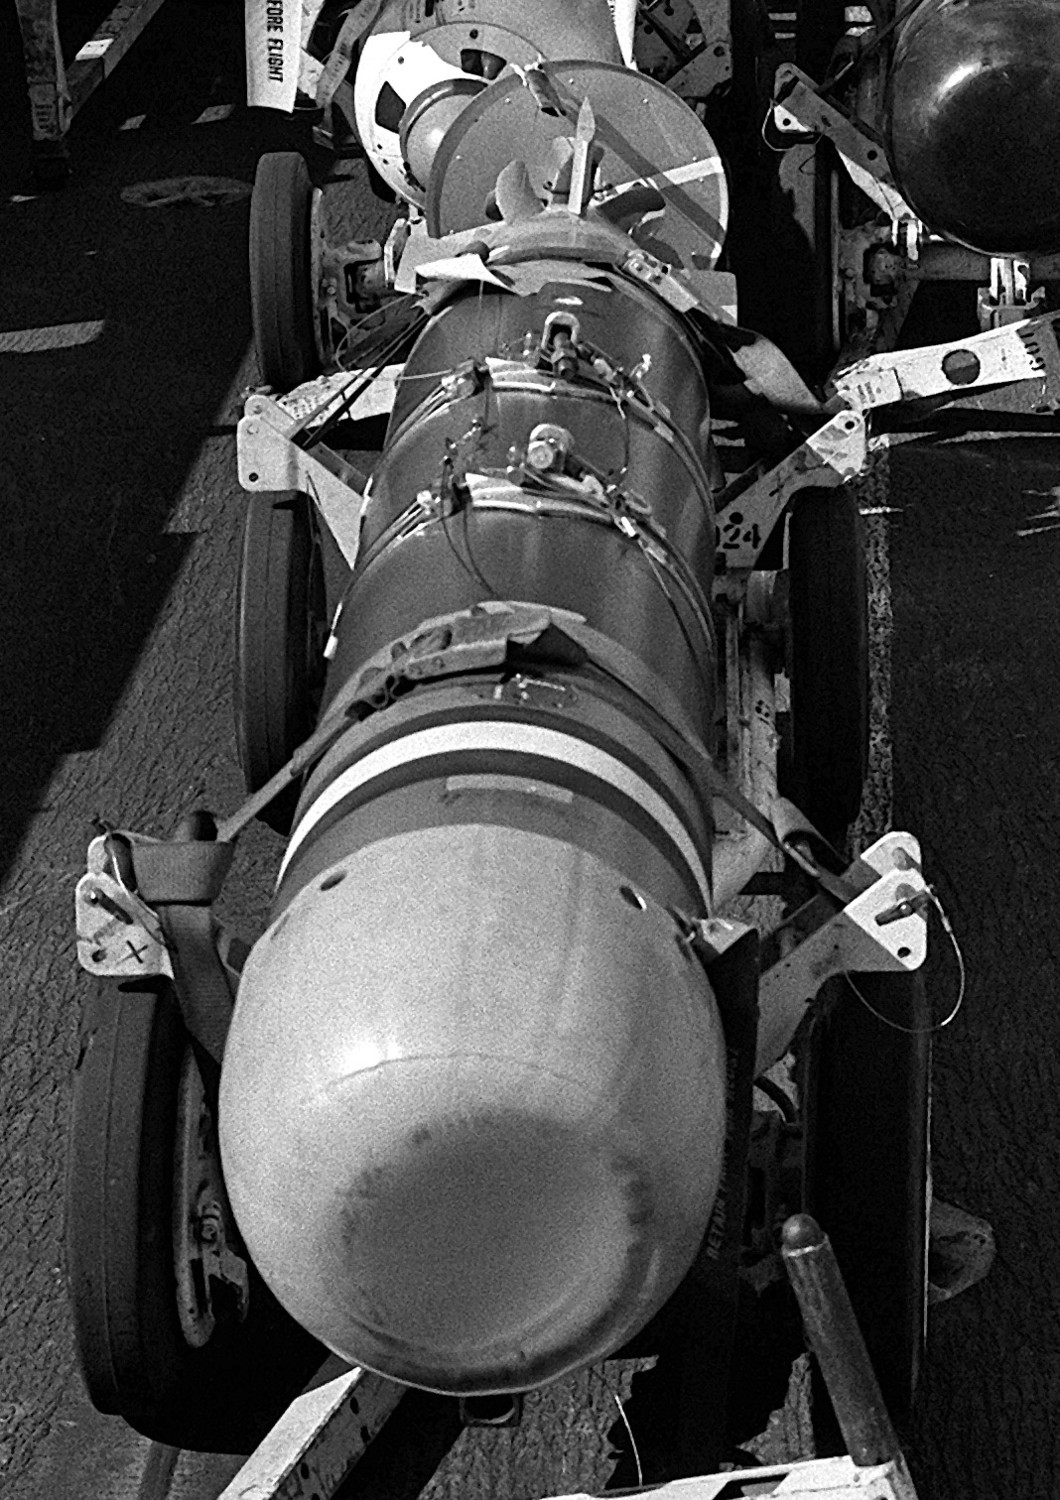 mk-46 mod.5 torpedo exercise fleetex 1990